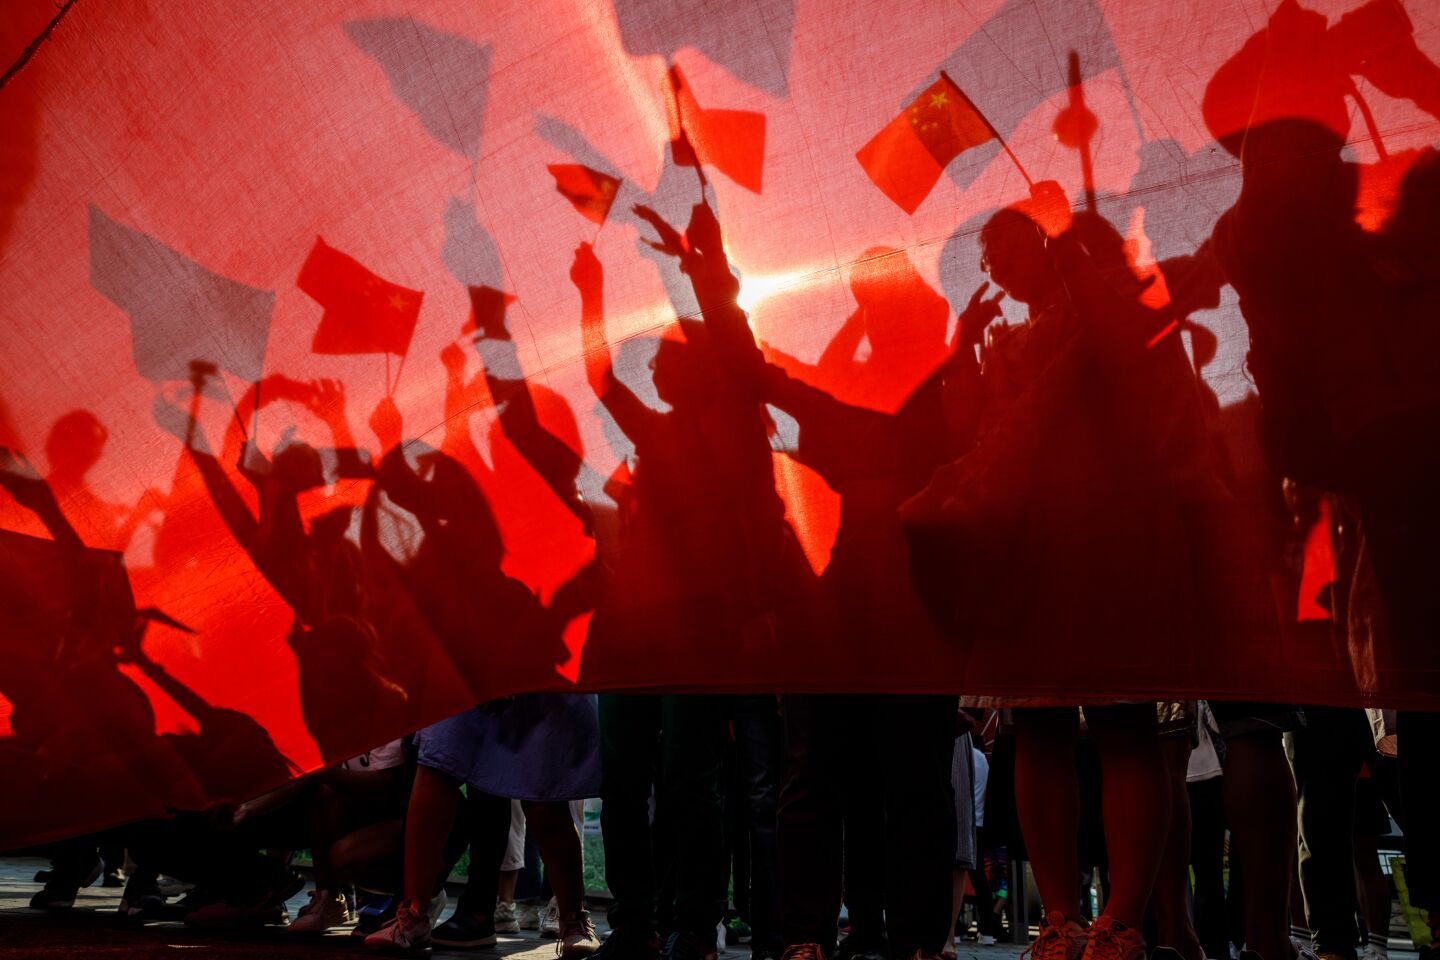 A few dozen people unfurl a large China flag and gather around it to commemorate China's national dayin Hong Kong.